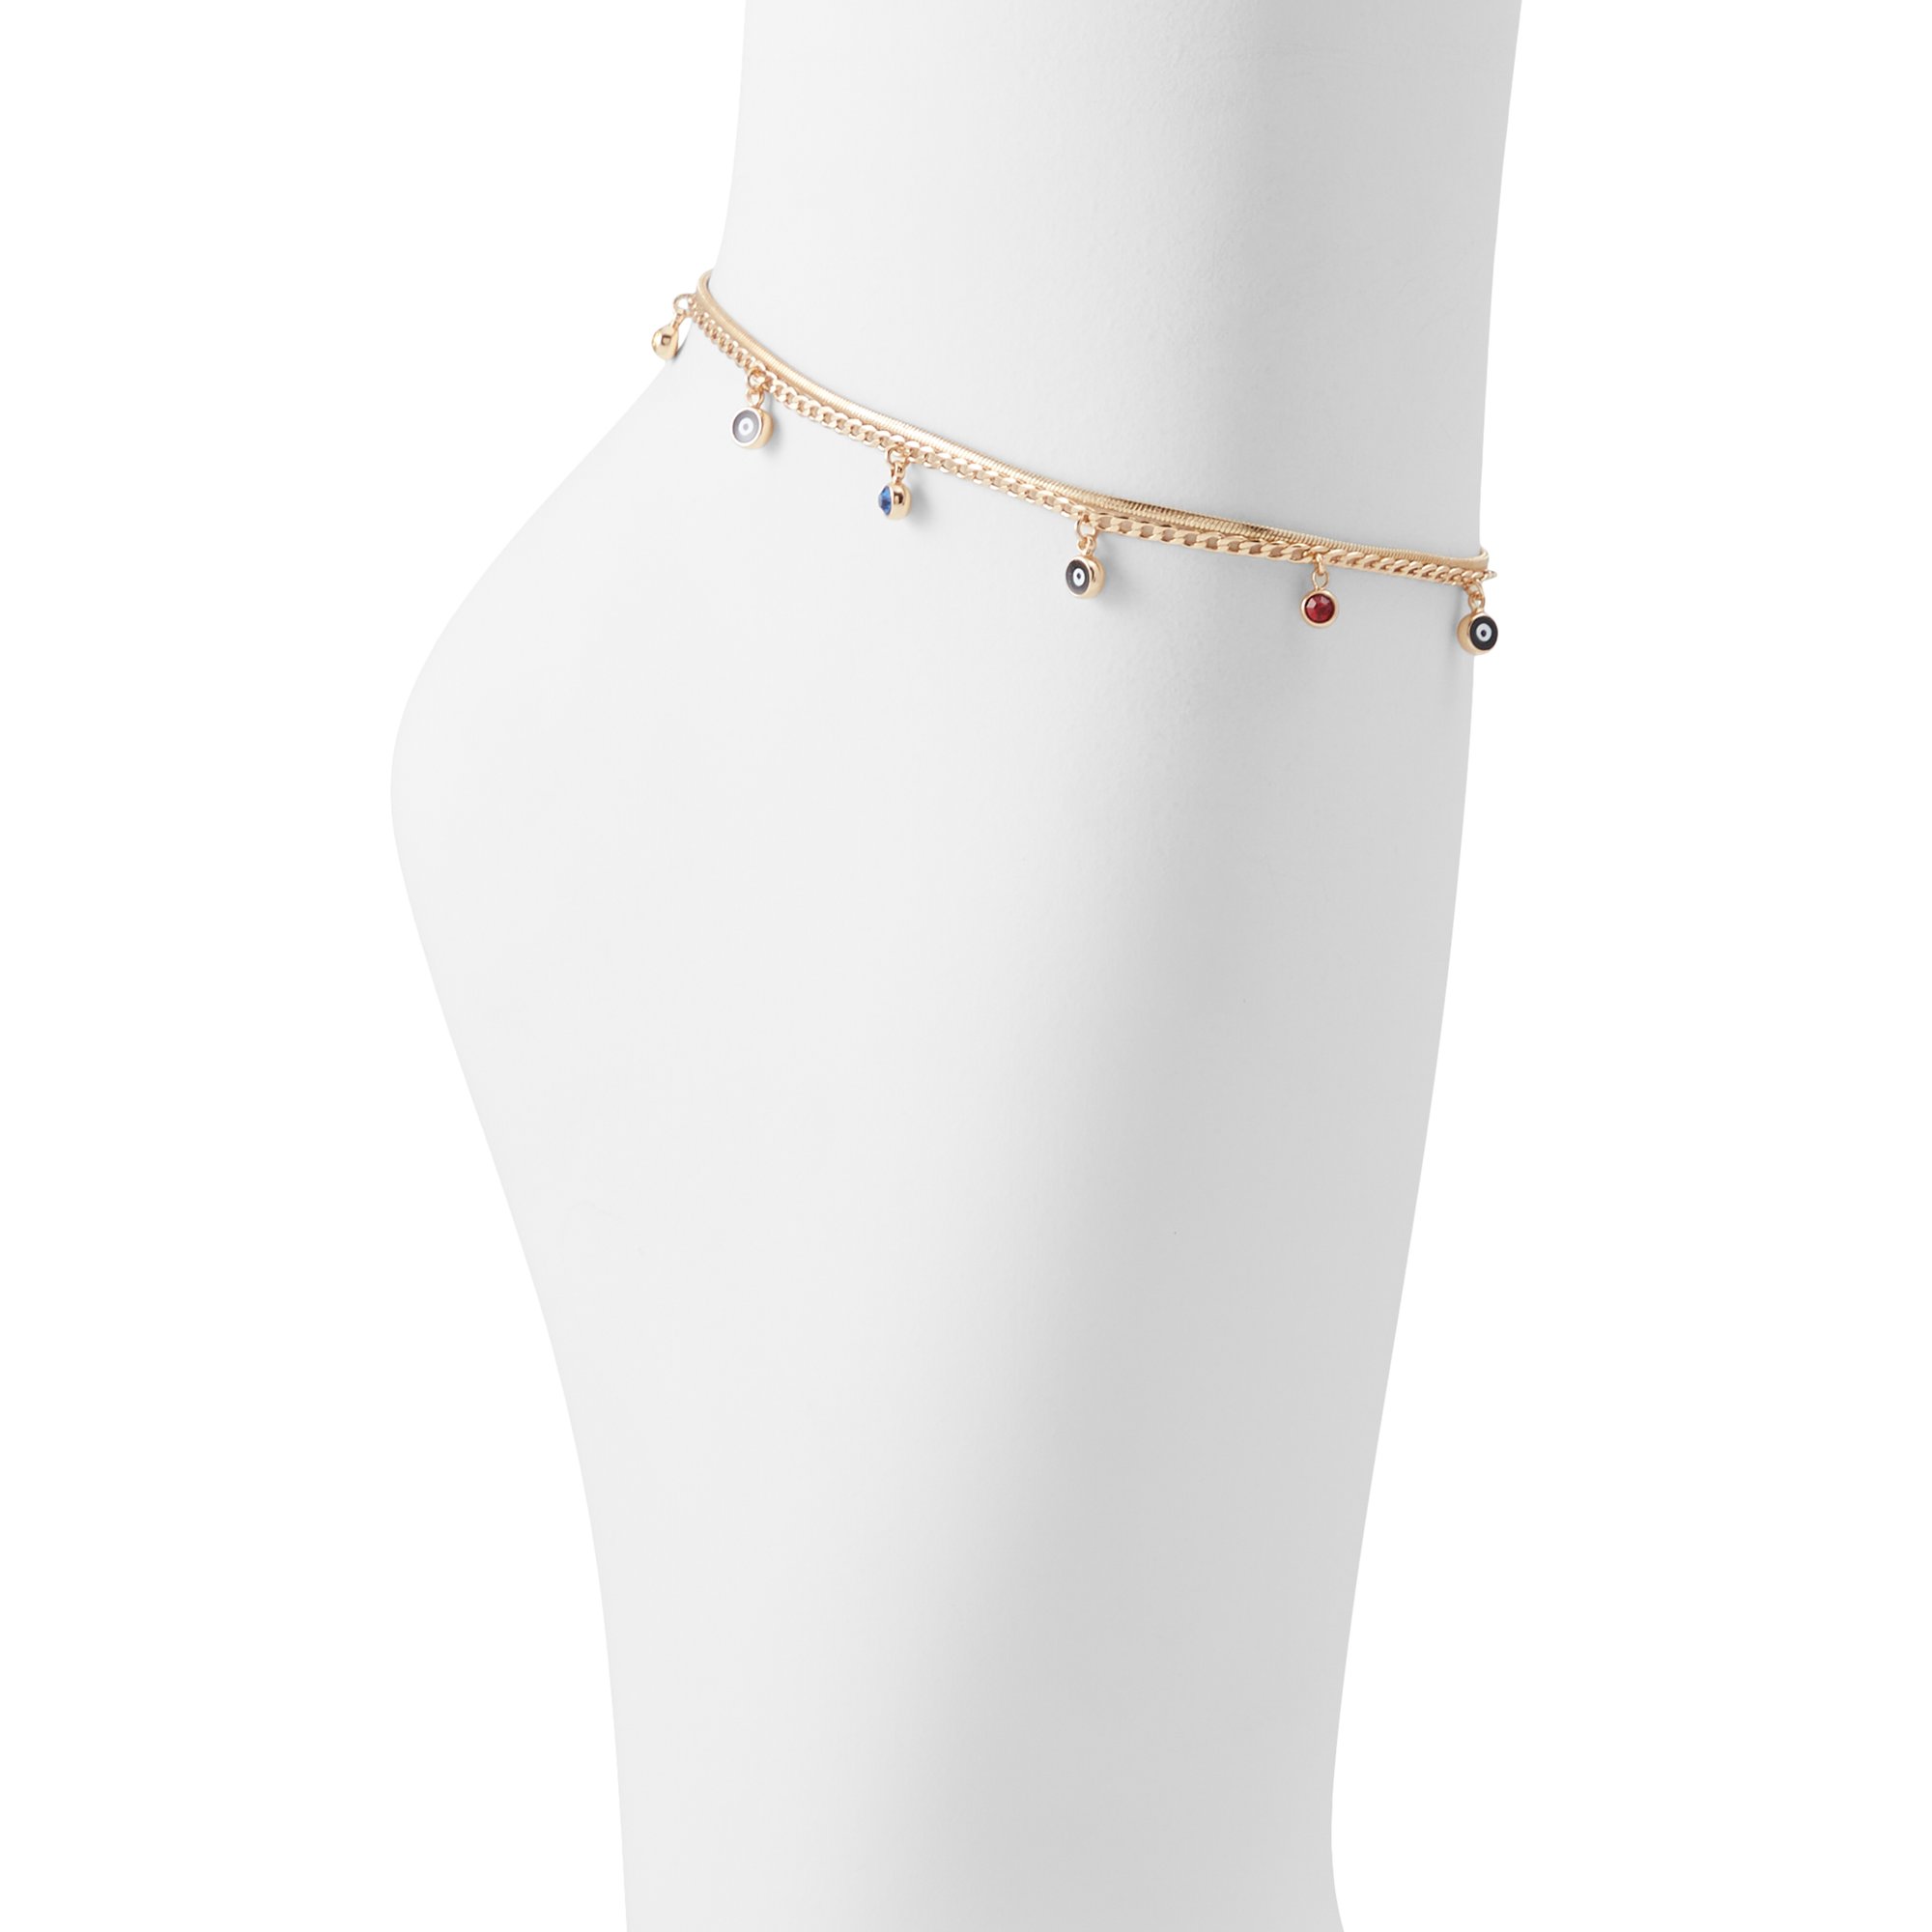 Image of ALDO Contamaessi - Women's Anklet Jewelry - Bright